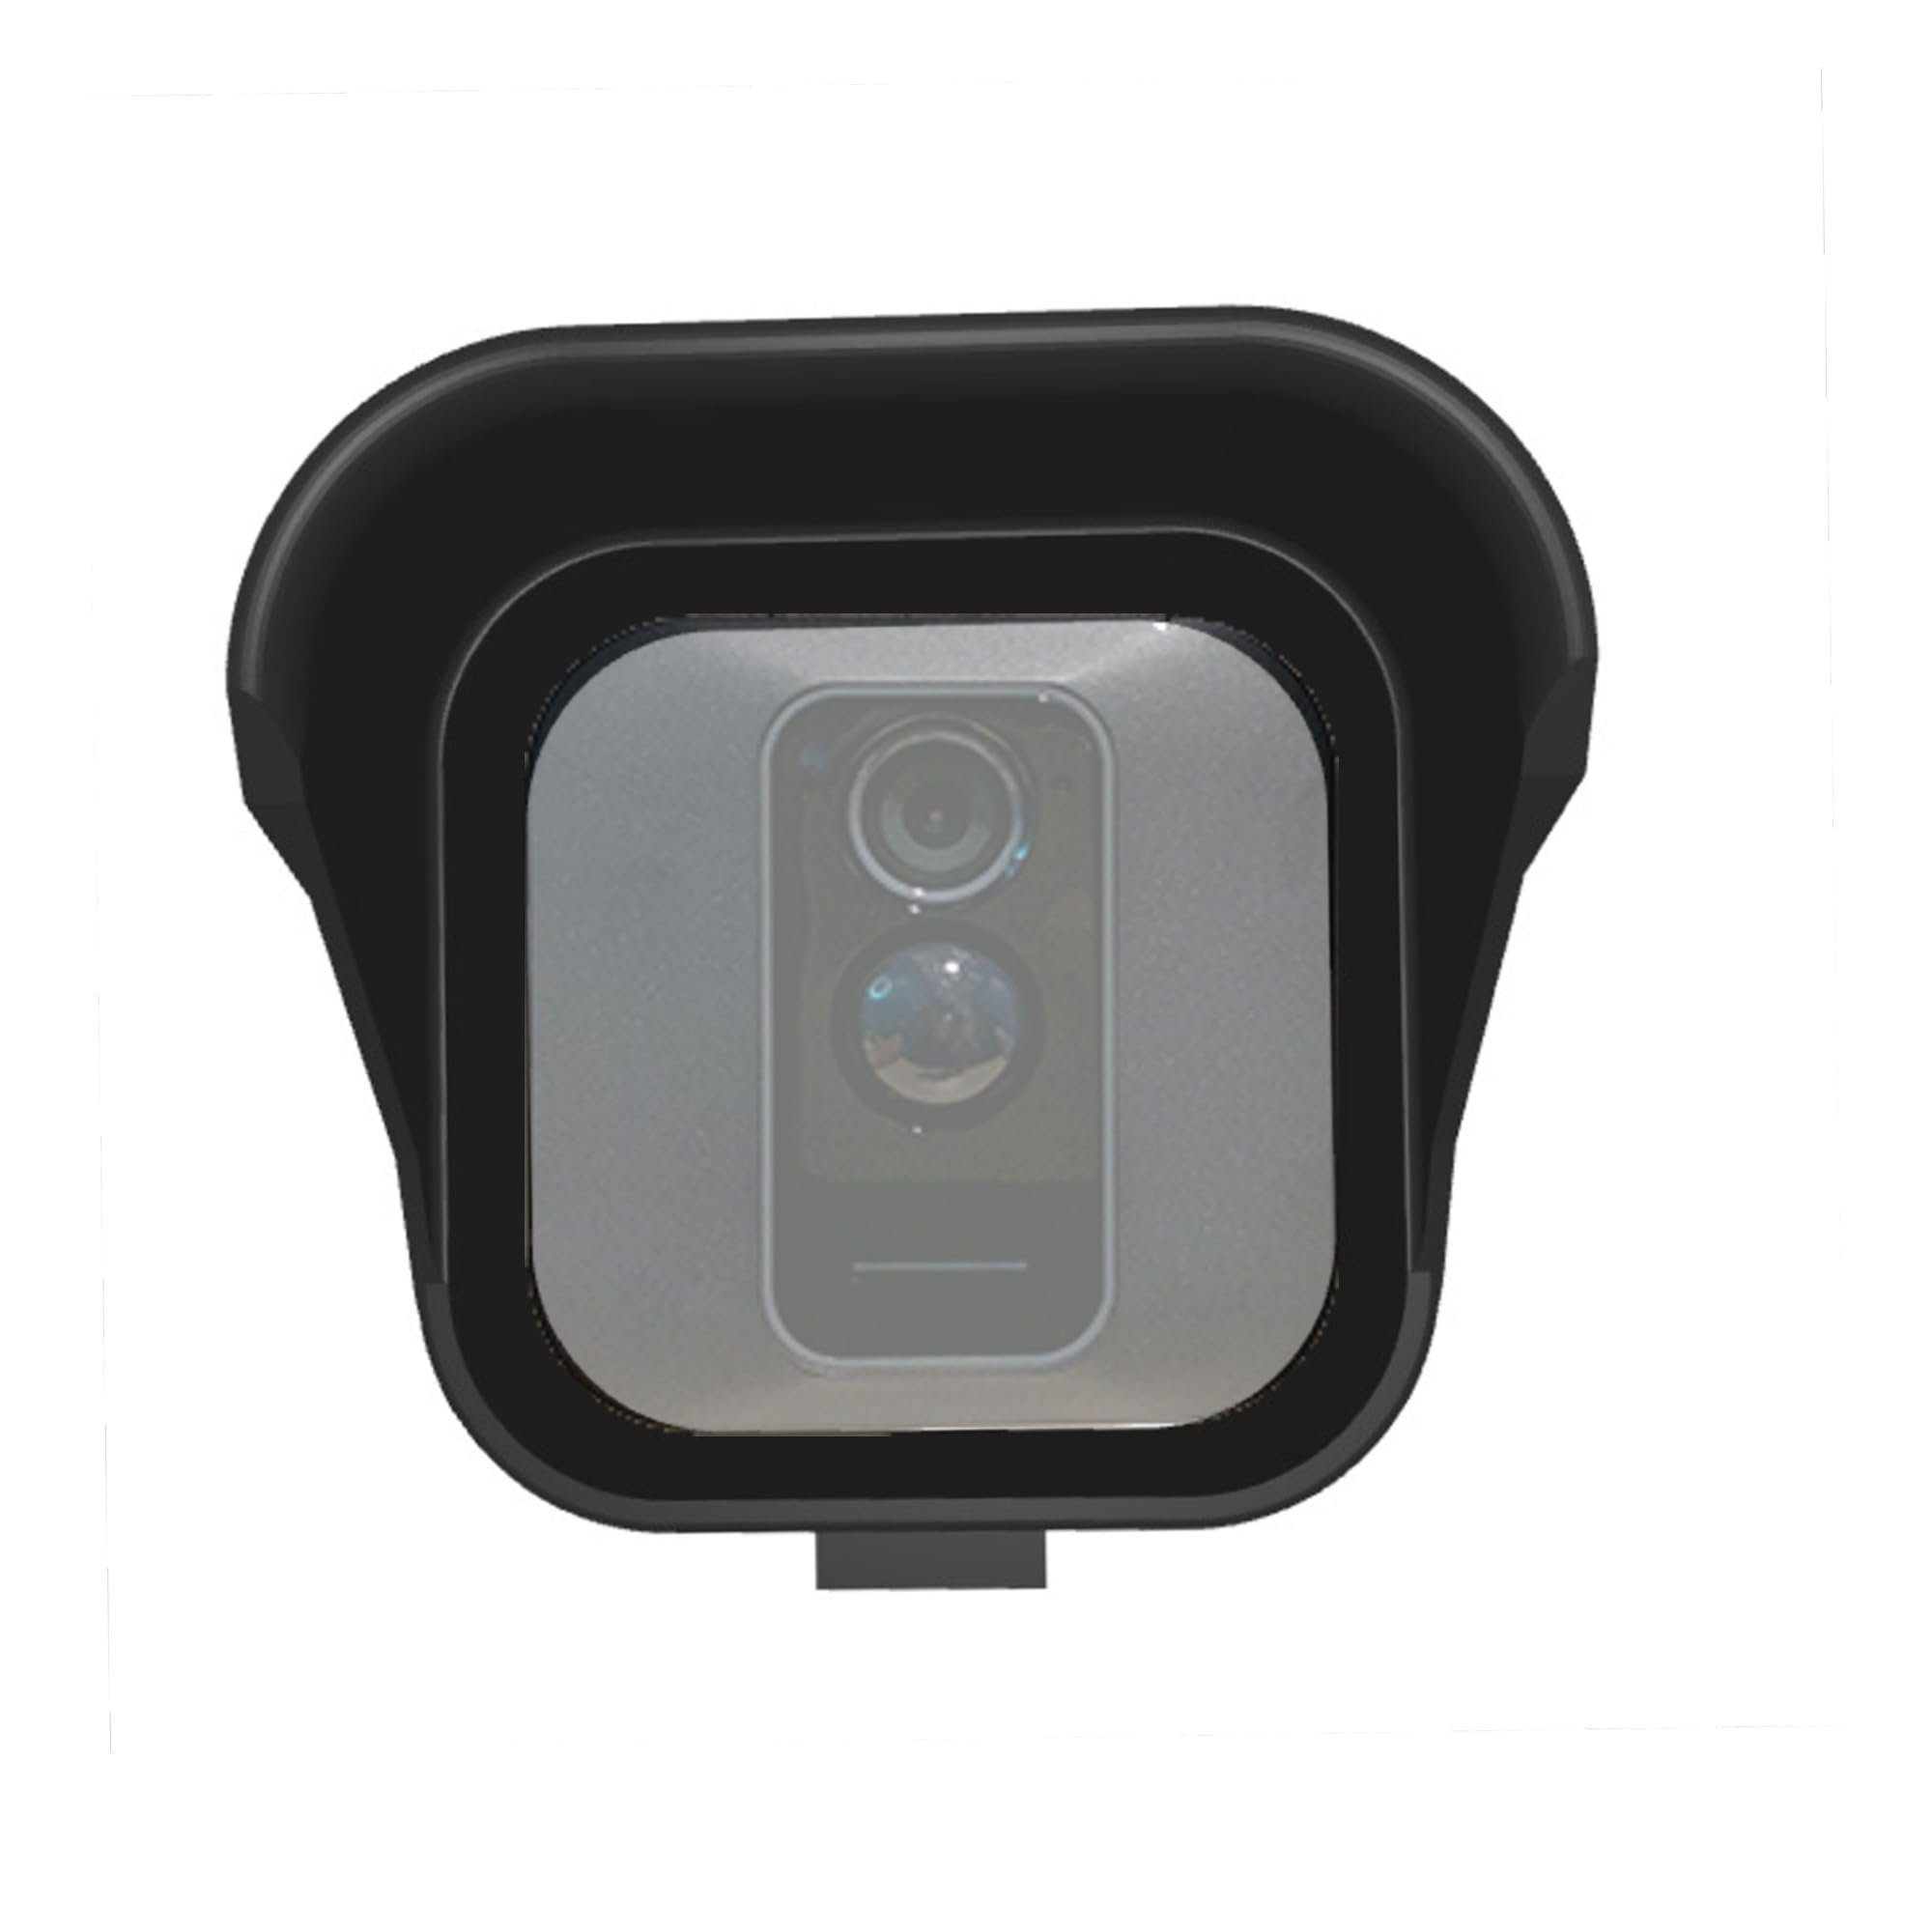 ULROAD Stativ Adapter für Blink Outdoor Kamera XT XT2 1/4" Halter Halterung Stativhalterung